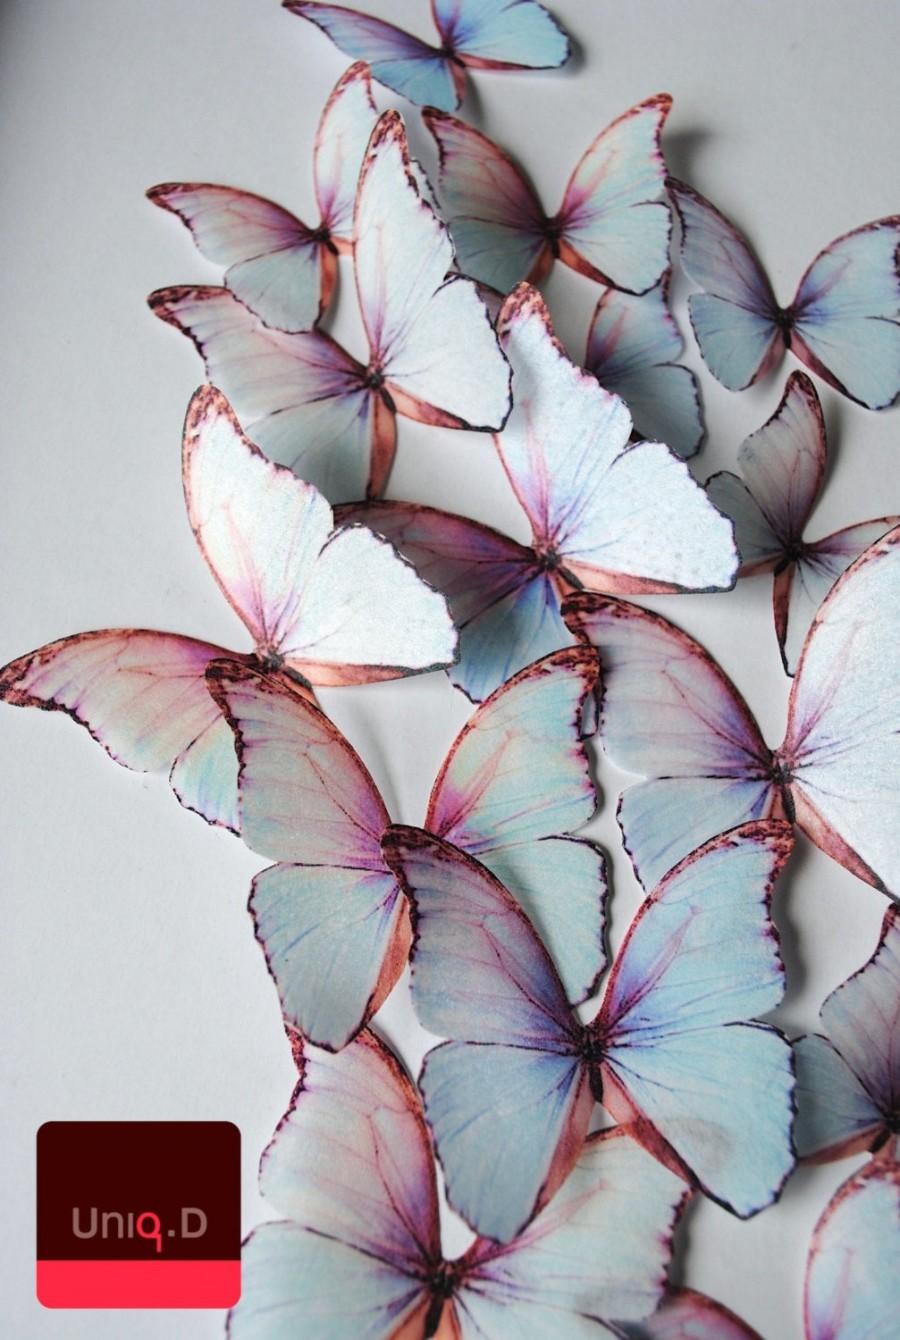 Wedding - 20 3D shimmering butterflies - iridescent white edible butterflies - frozen cake decoration - 3D edible butterflies by Uniqdots on Etsy